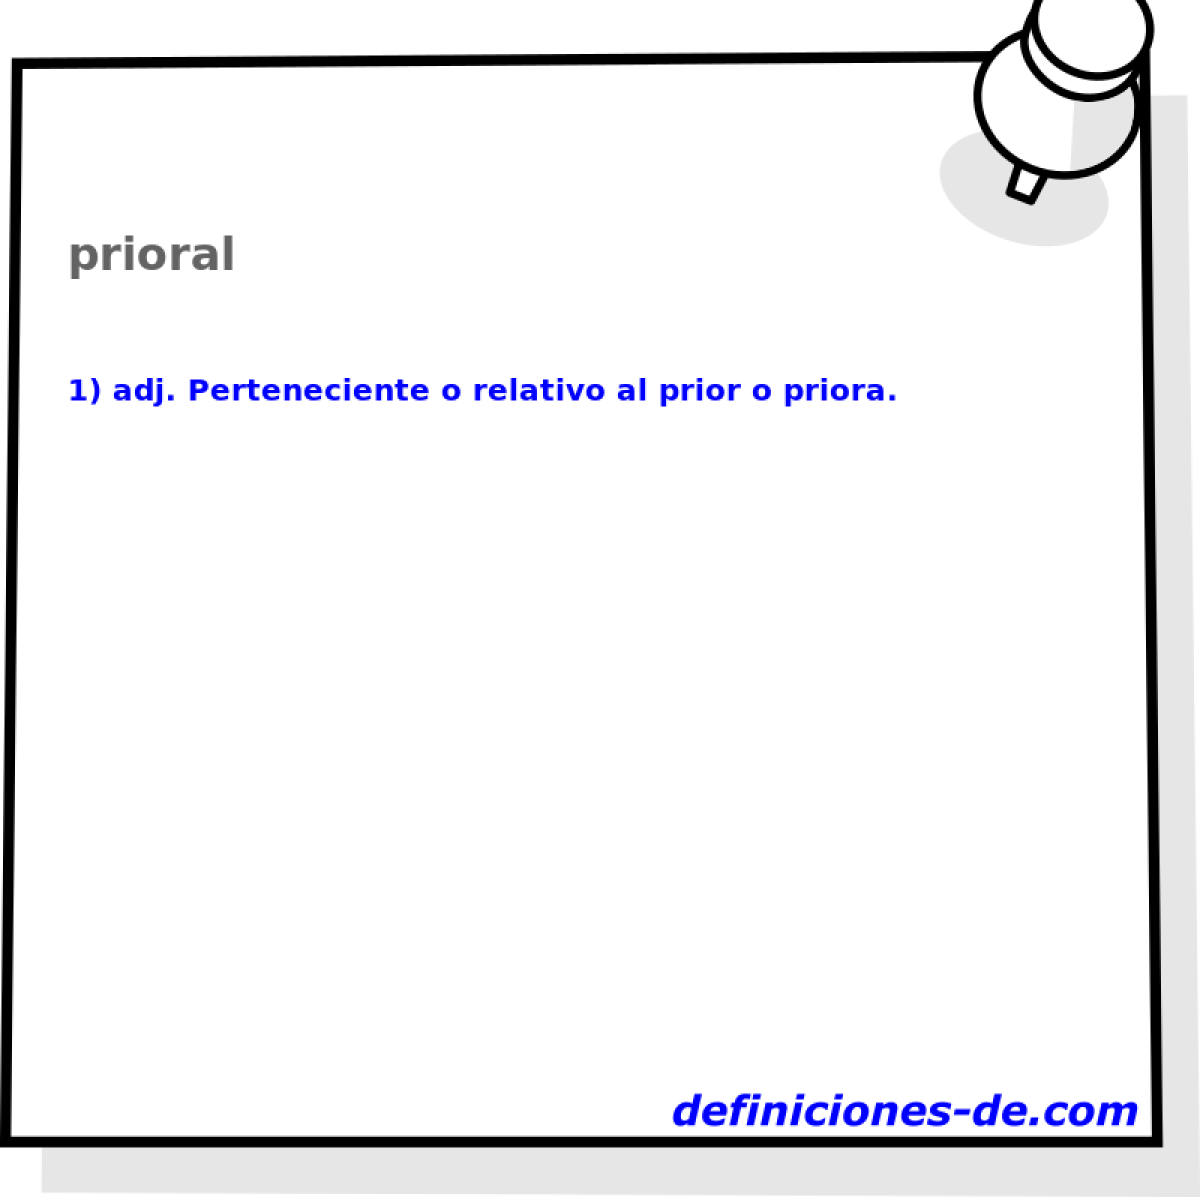 prioral 